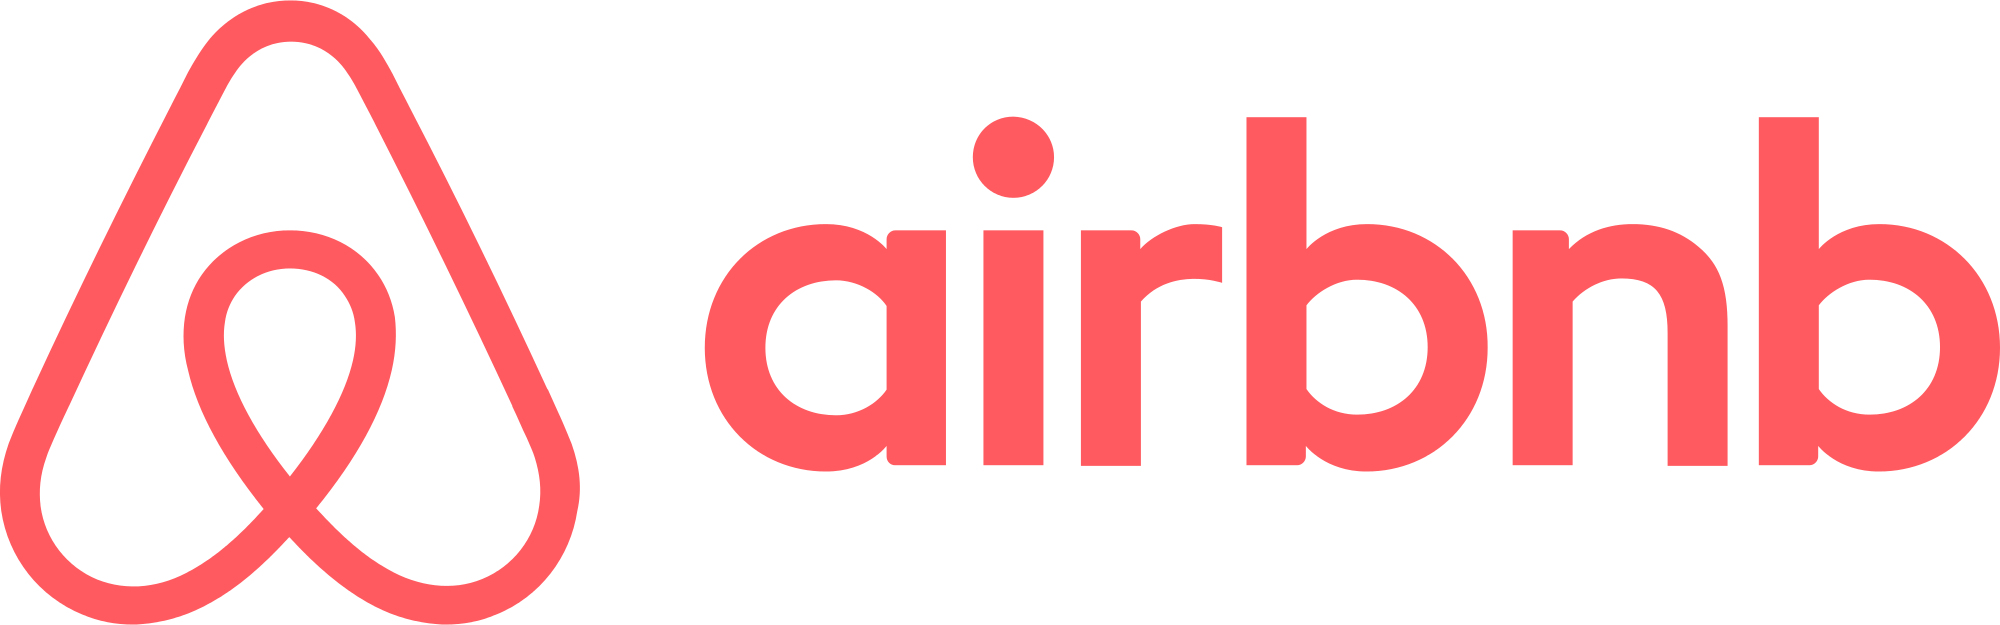 Airbnb text logo